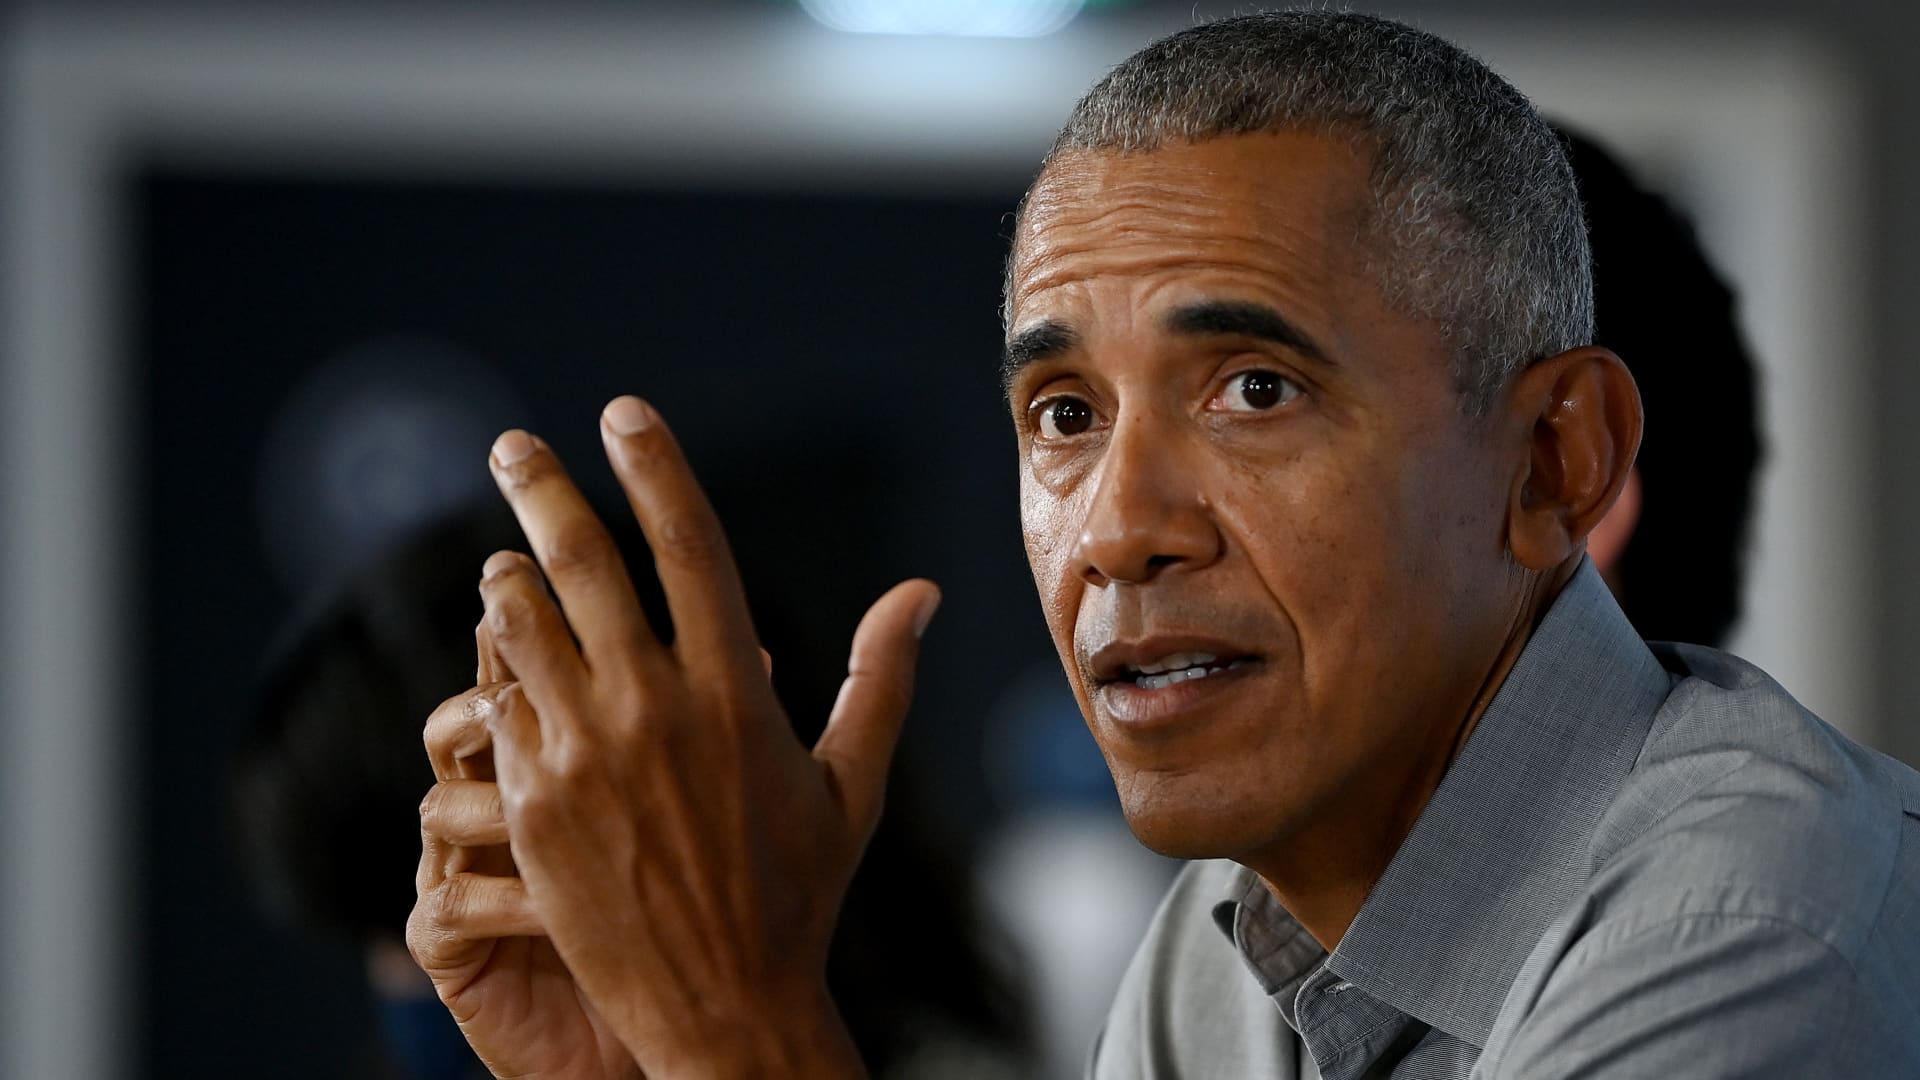 Obama calls for tech regulation to combat disinformation on social media